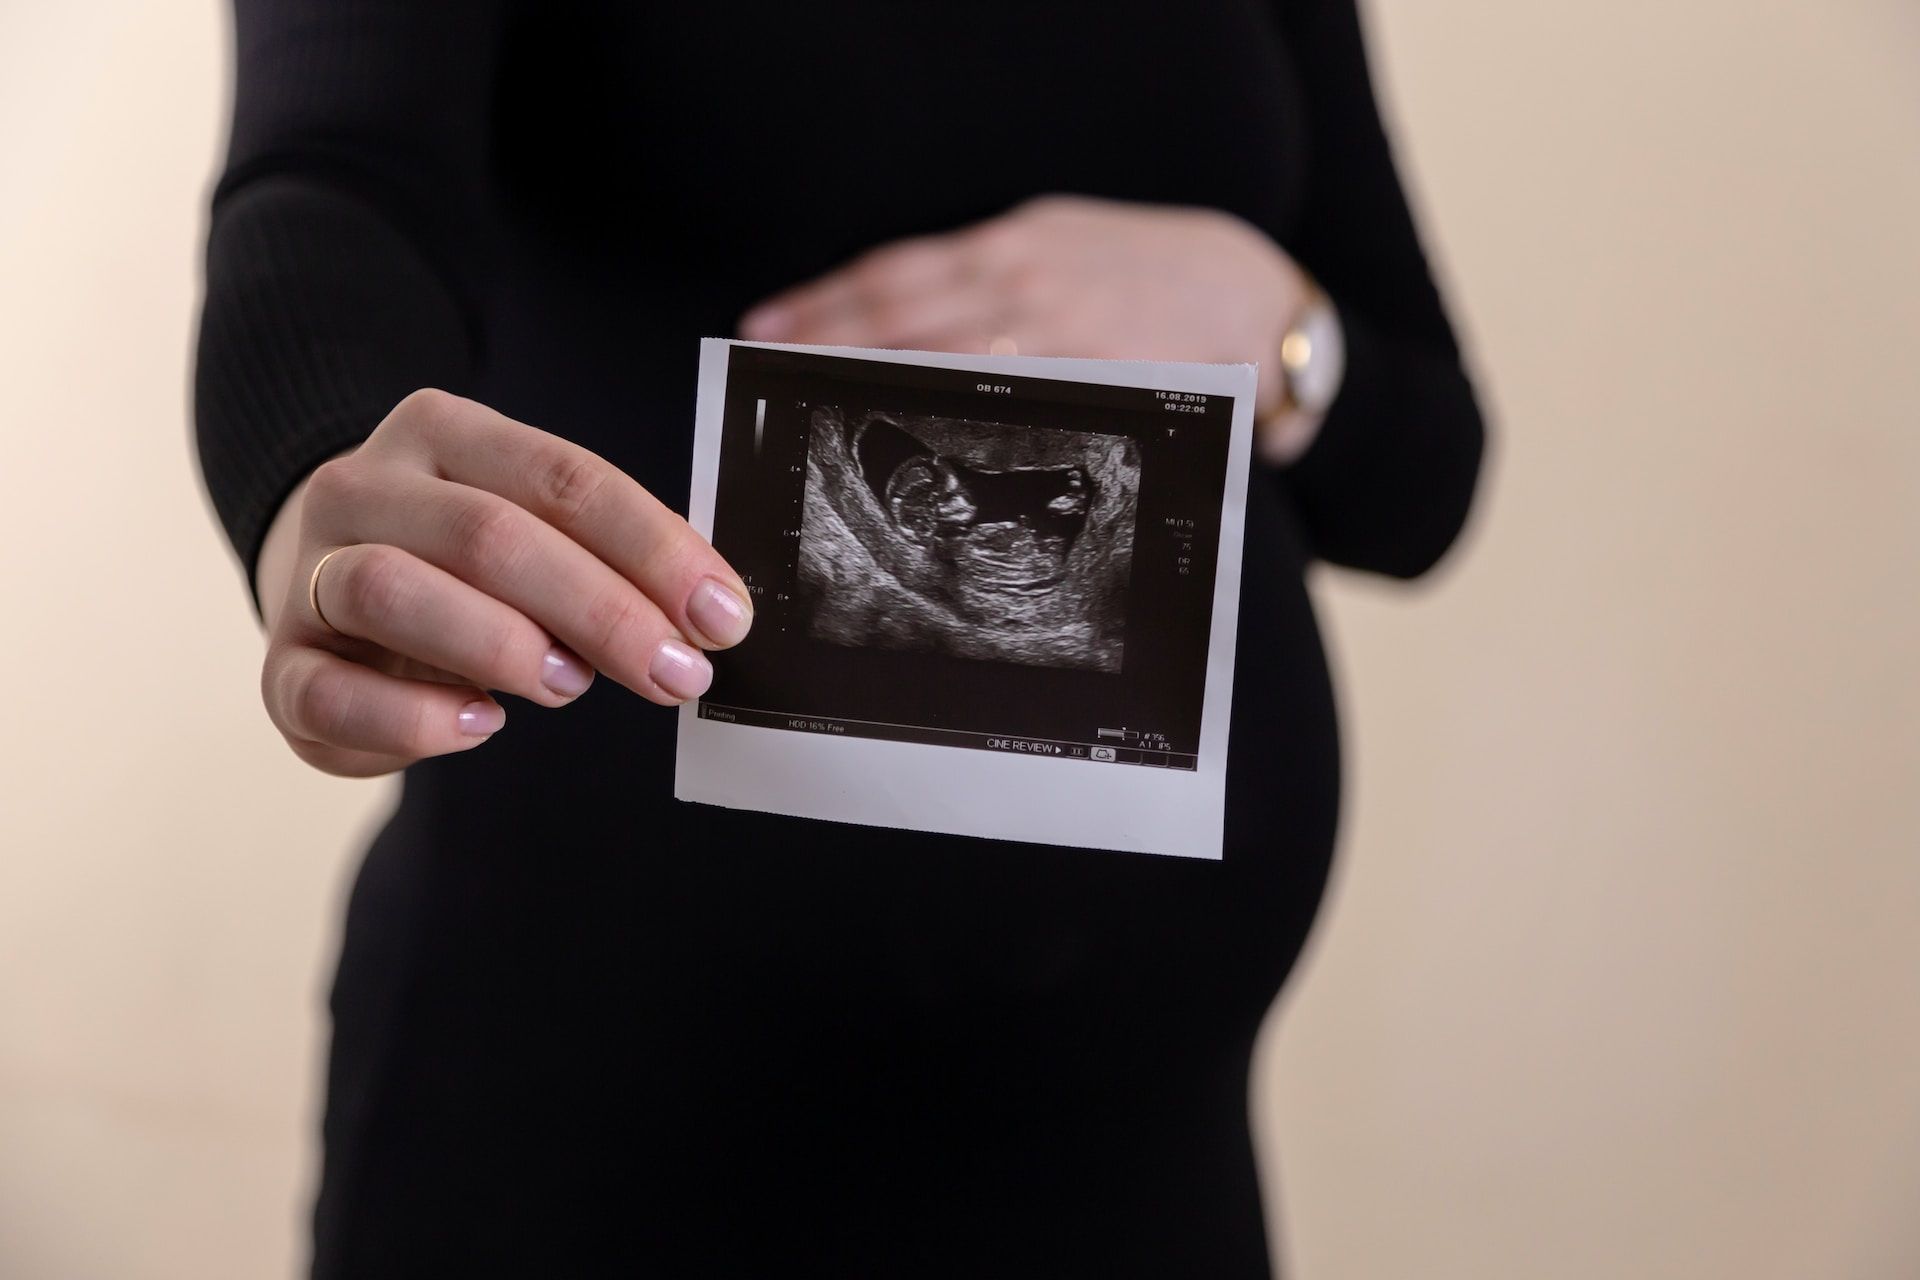 badania prenatalne co oznaczają skróty